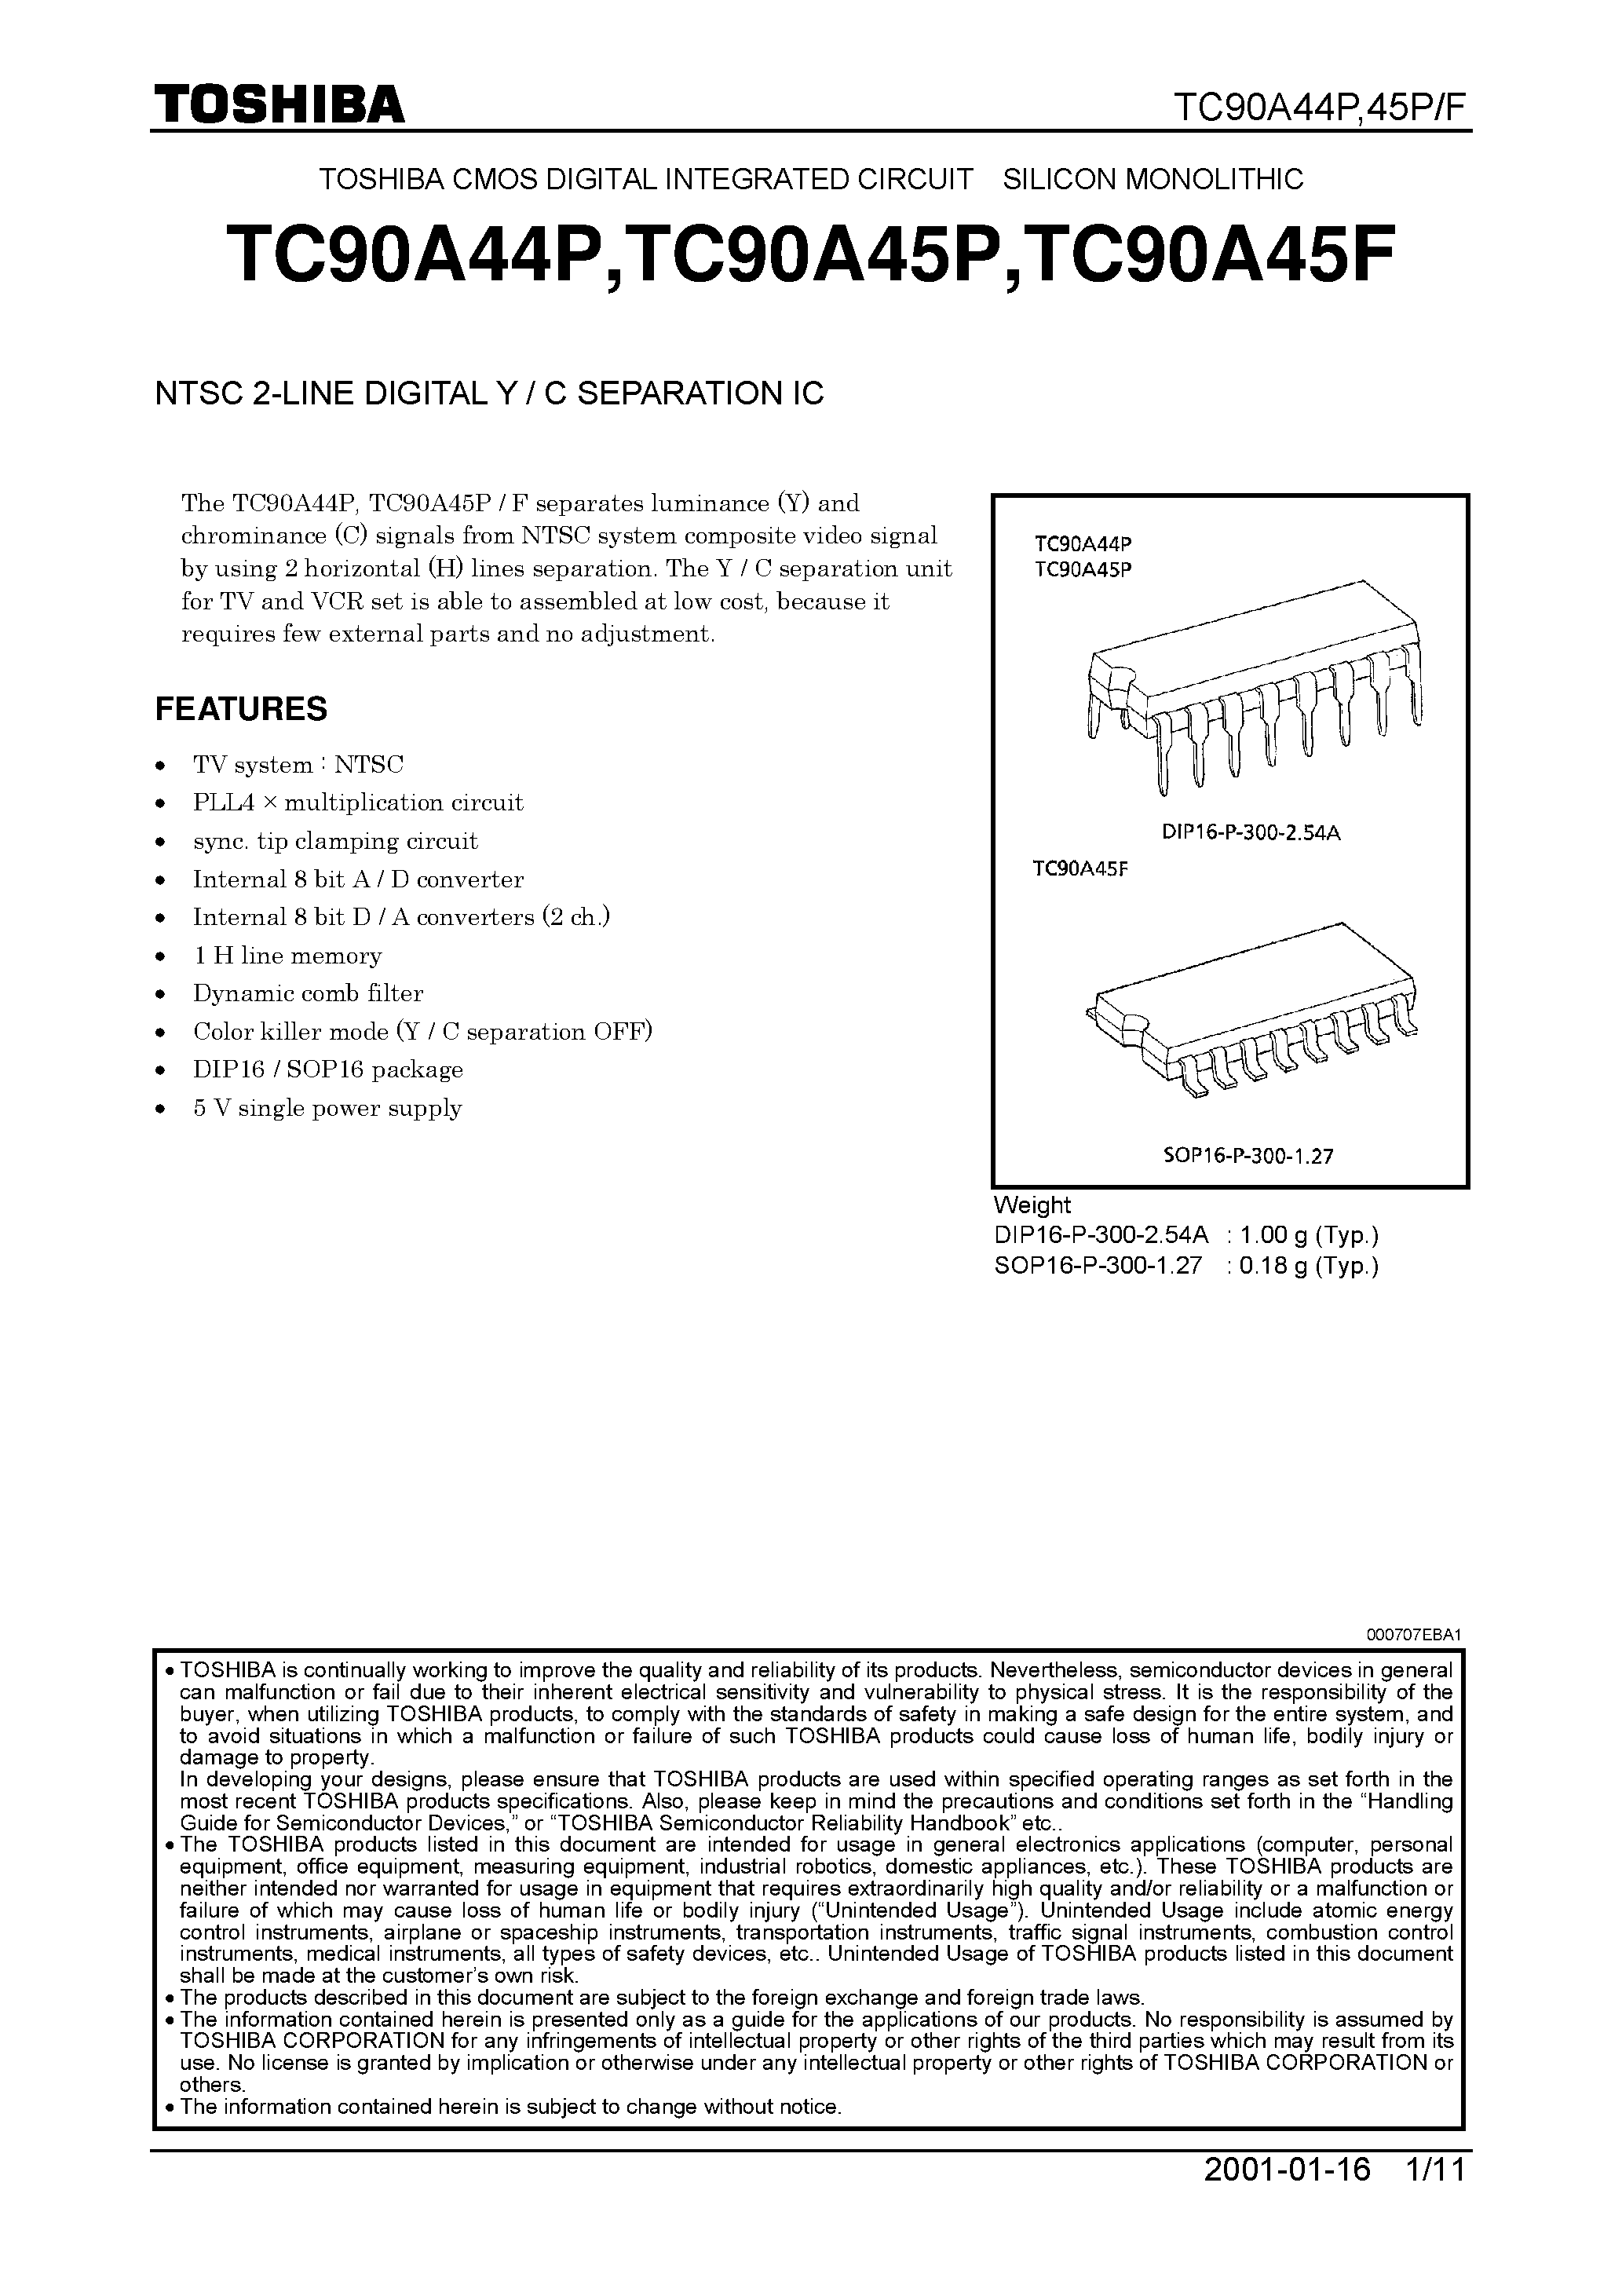 Datasheet TC90A44F - NTSC 2-LINE DIGITAL Y/C SEPARATION IC page 1